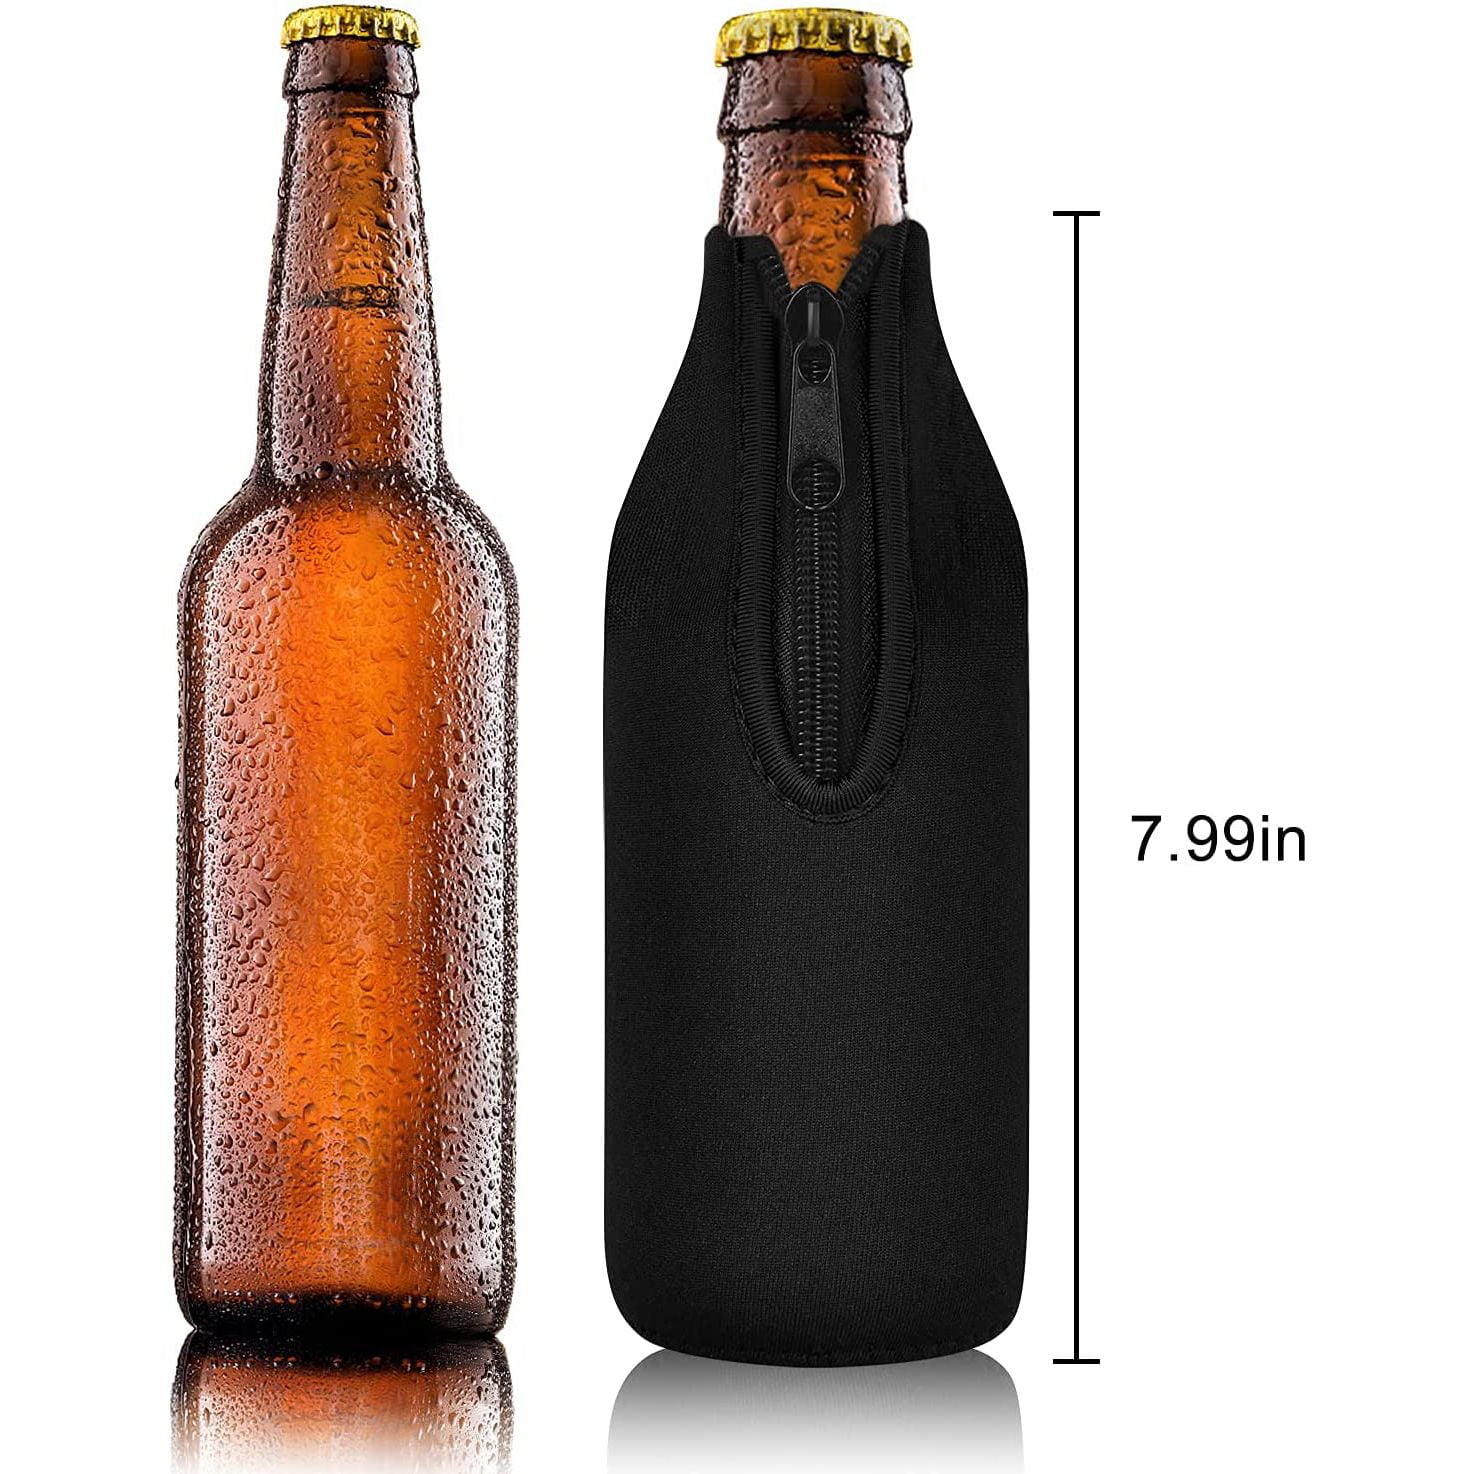 Lit Handlers Beer Bottle Insulators - Neoprene Fabric Beer Bottle Sleeve -  Insulated Beverage Holder for Beer Bottles - Water Resistant, Reusable